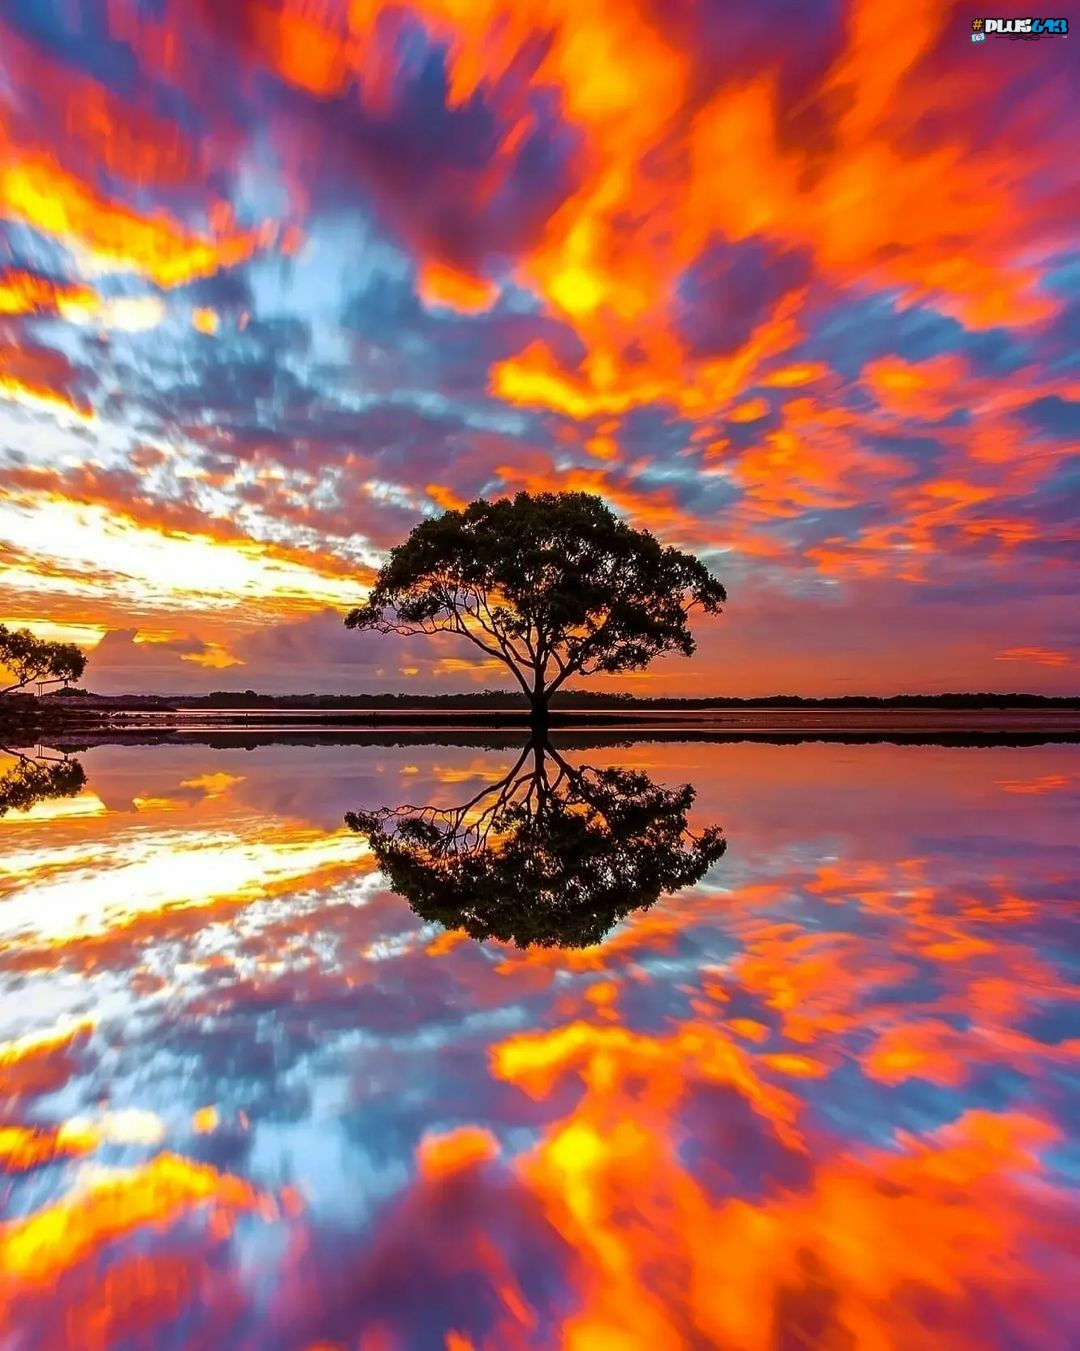 Australia - mirror image over water